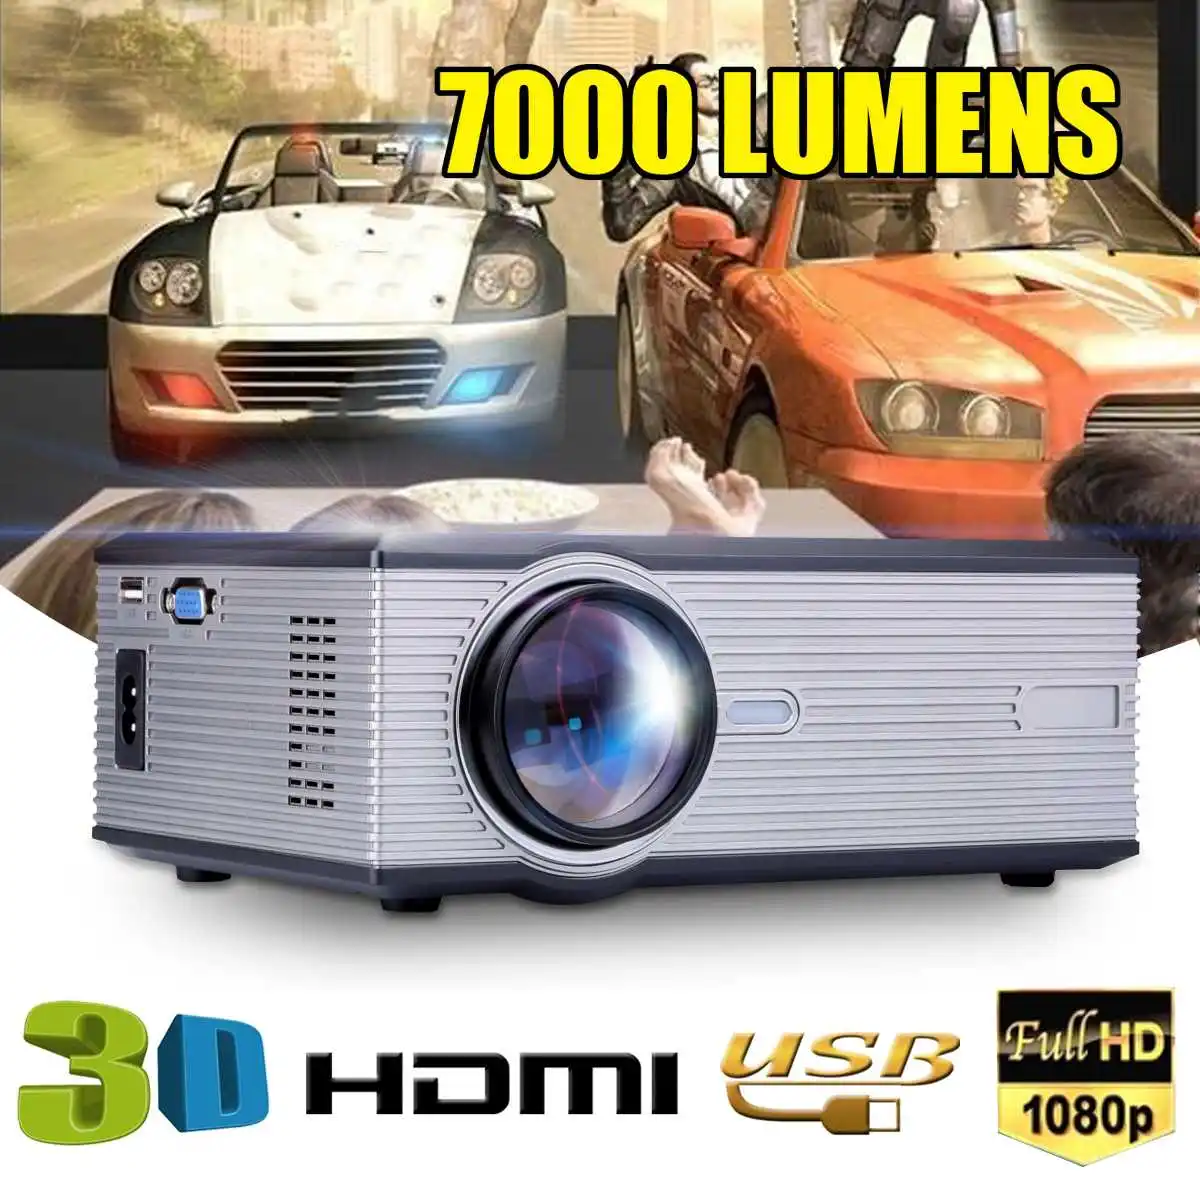 

1080P LED Video Projector for Home Theater 7000Lumen support Full HD Mini projector HDMI/USB/SD/AV/VGA HOME CINEMA